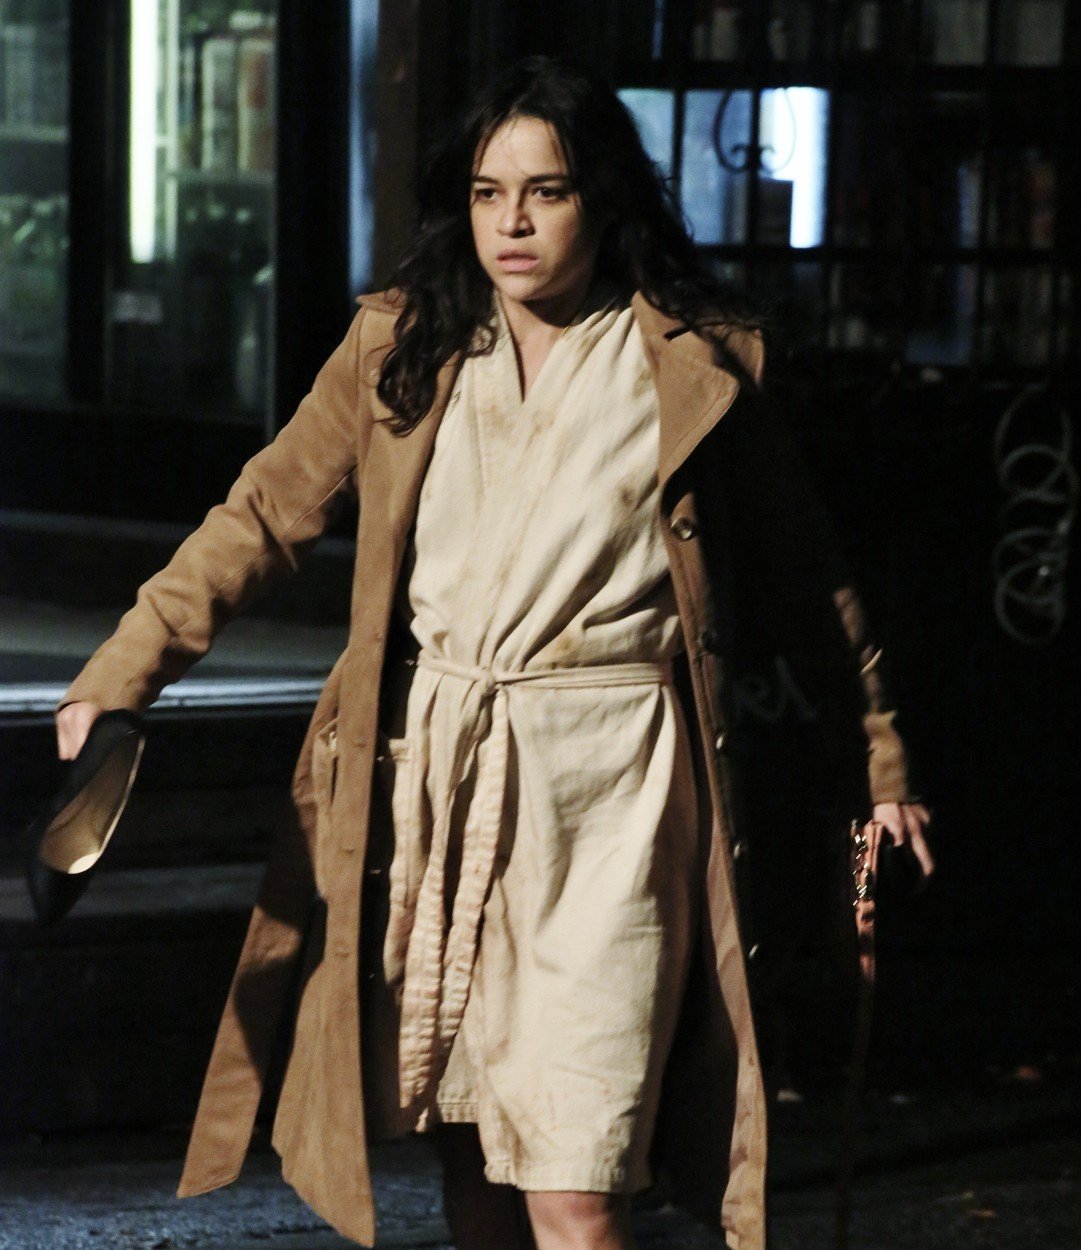 Herečka Michelle Rodriguez natáčela scénu do filmu. 